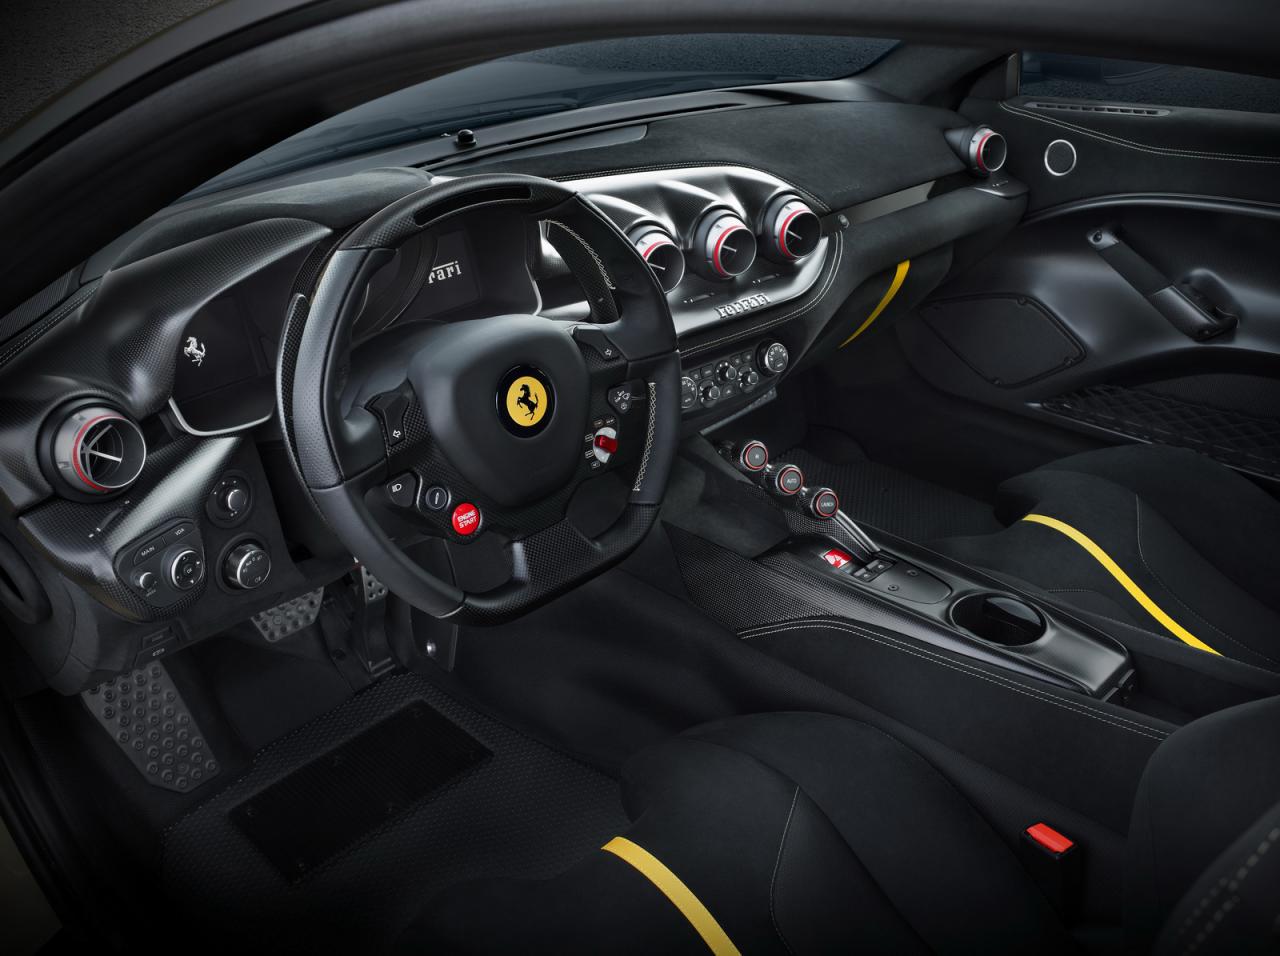 Oficial: Ferrari F12tdf, el más radical con 780 caballos